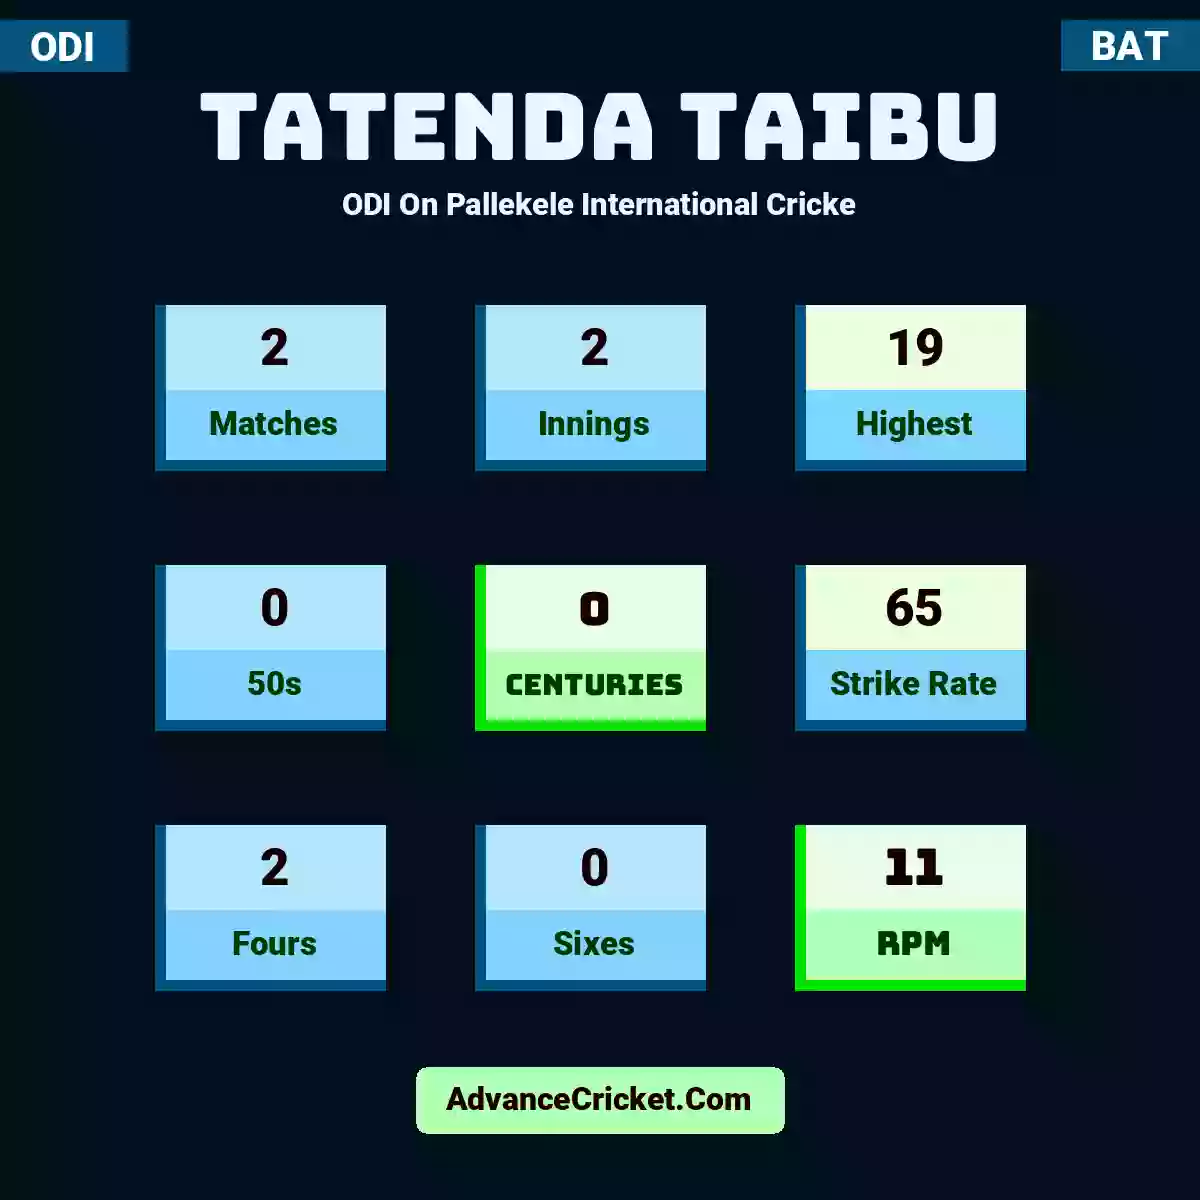 Tatenda Taibu ODI  On Pallekele International Cricke, Tatenda Taibu played 2 matches, scored 19 runs as highest, 0 half-centuries, and 0 centuries, with a strike rate of 65. T.Taibu hit 2 fours and 0 sixes, with an RPM of 11.